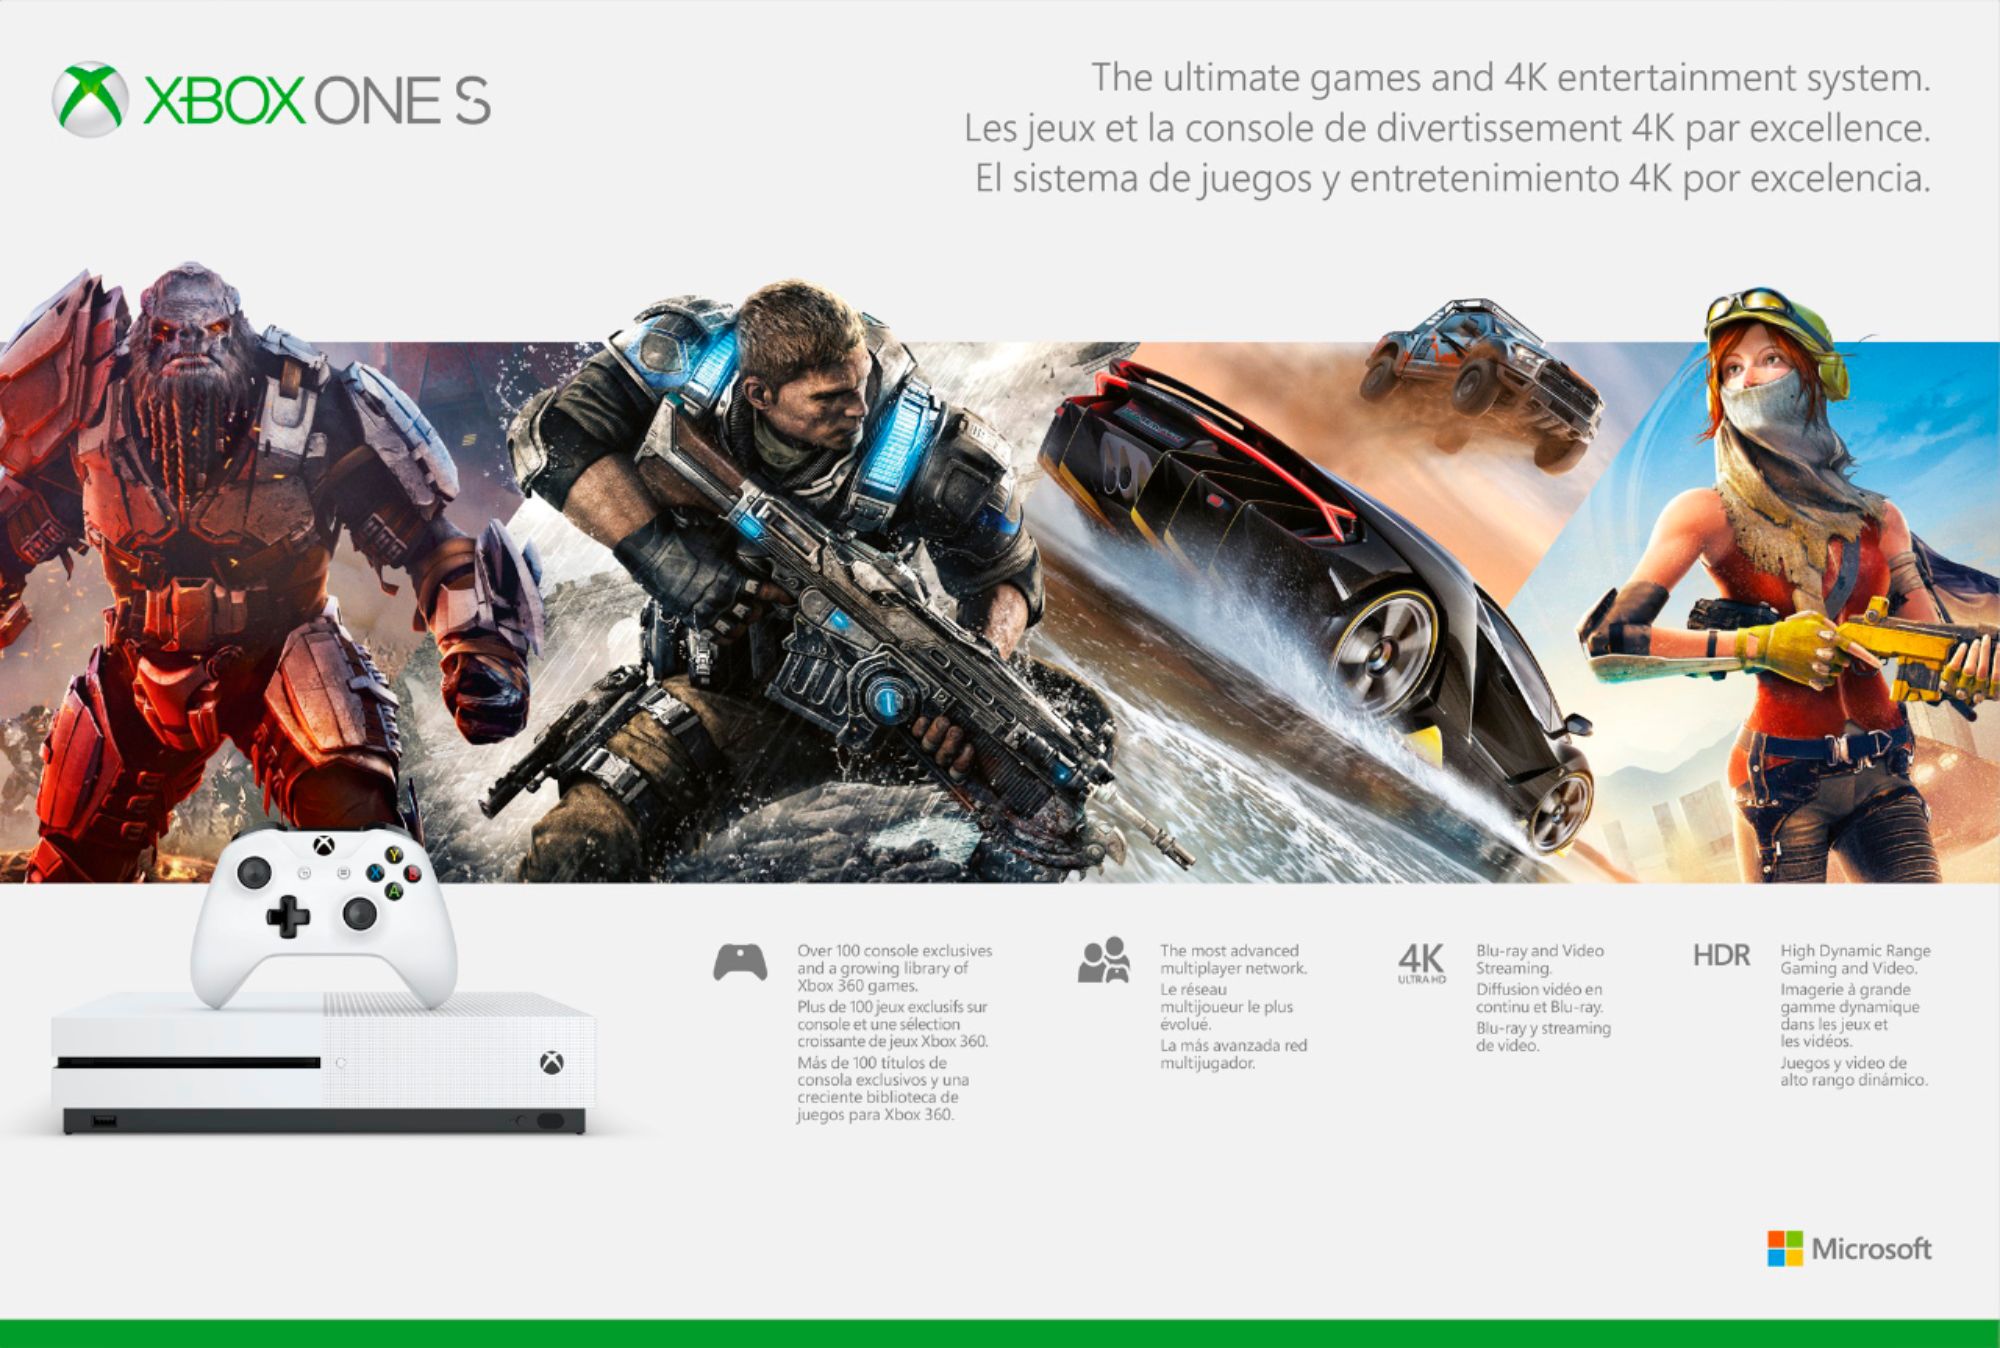 Microsoft XBOX Xbox One S 1TB Console+Additional Controller White